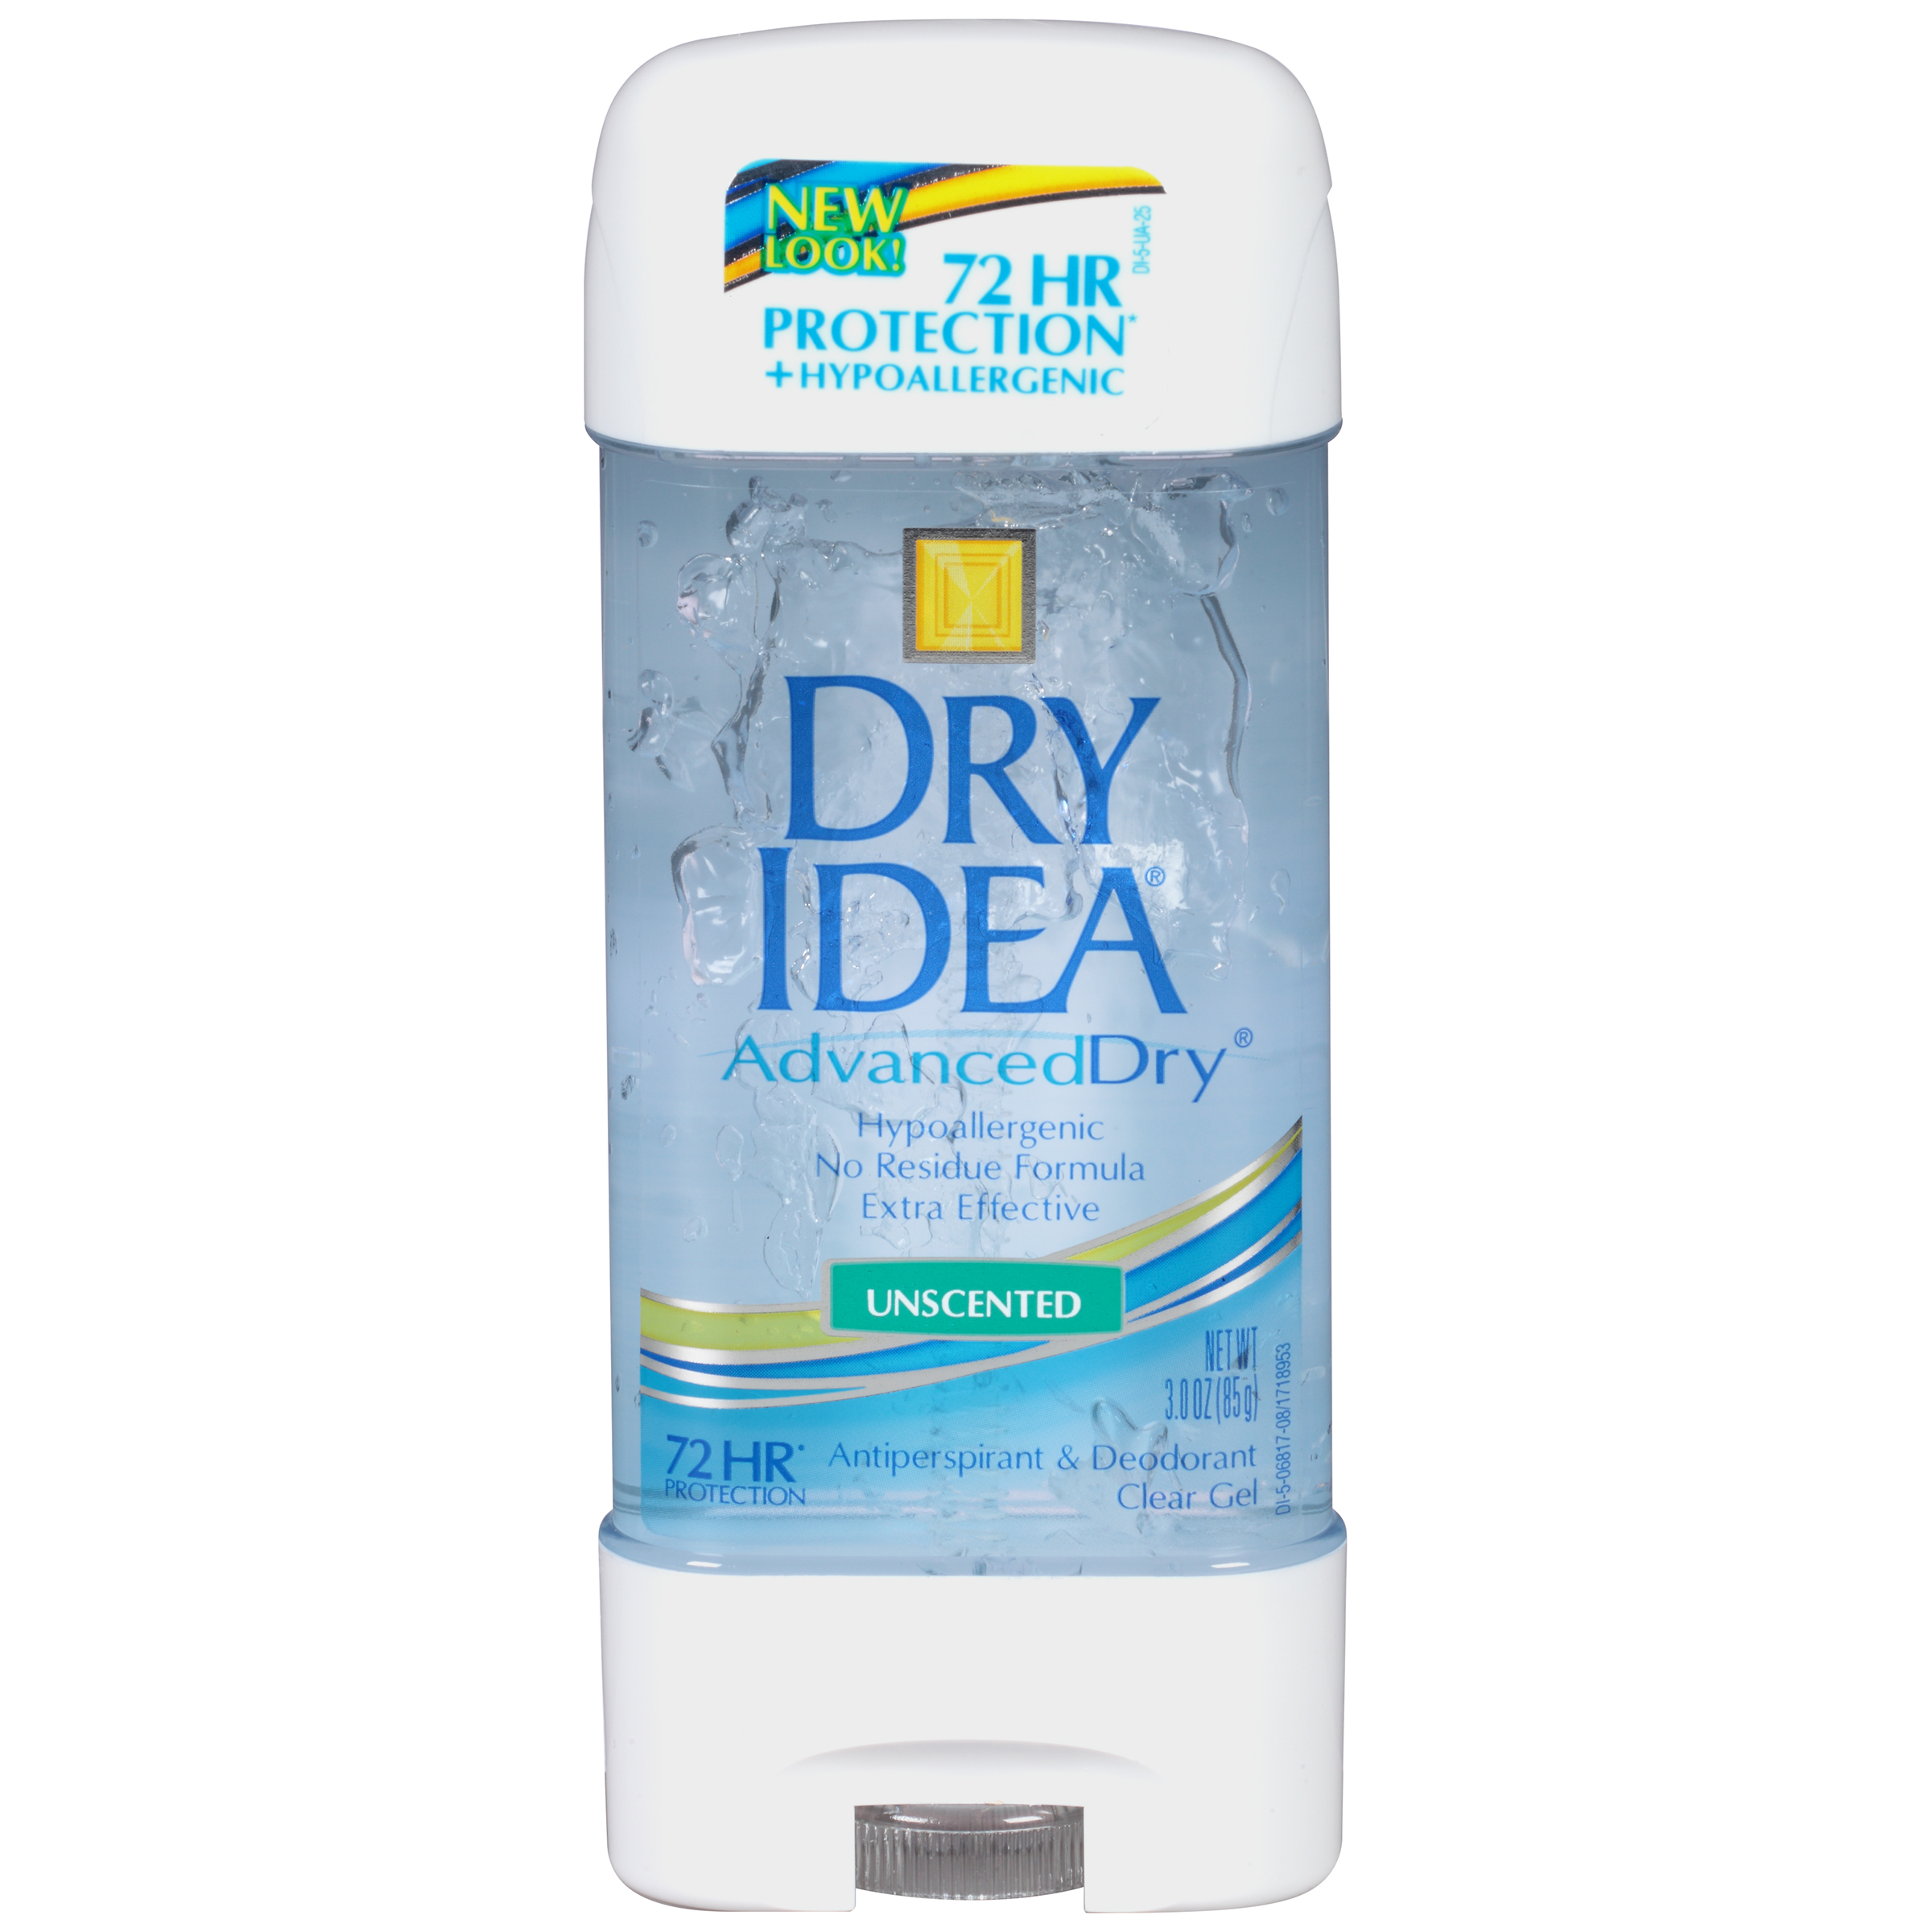 Dry Idea Antiperspirant Deodorant Gel, Unscented, 3 oz - image 1 of 9